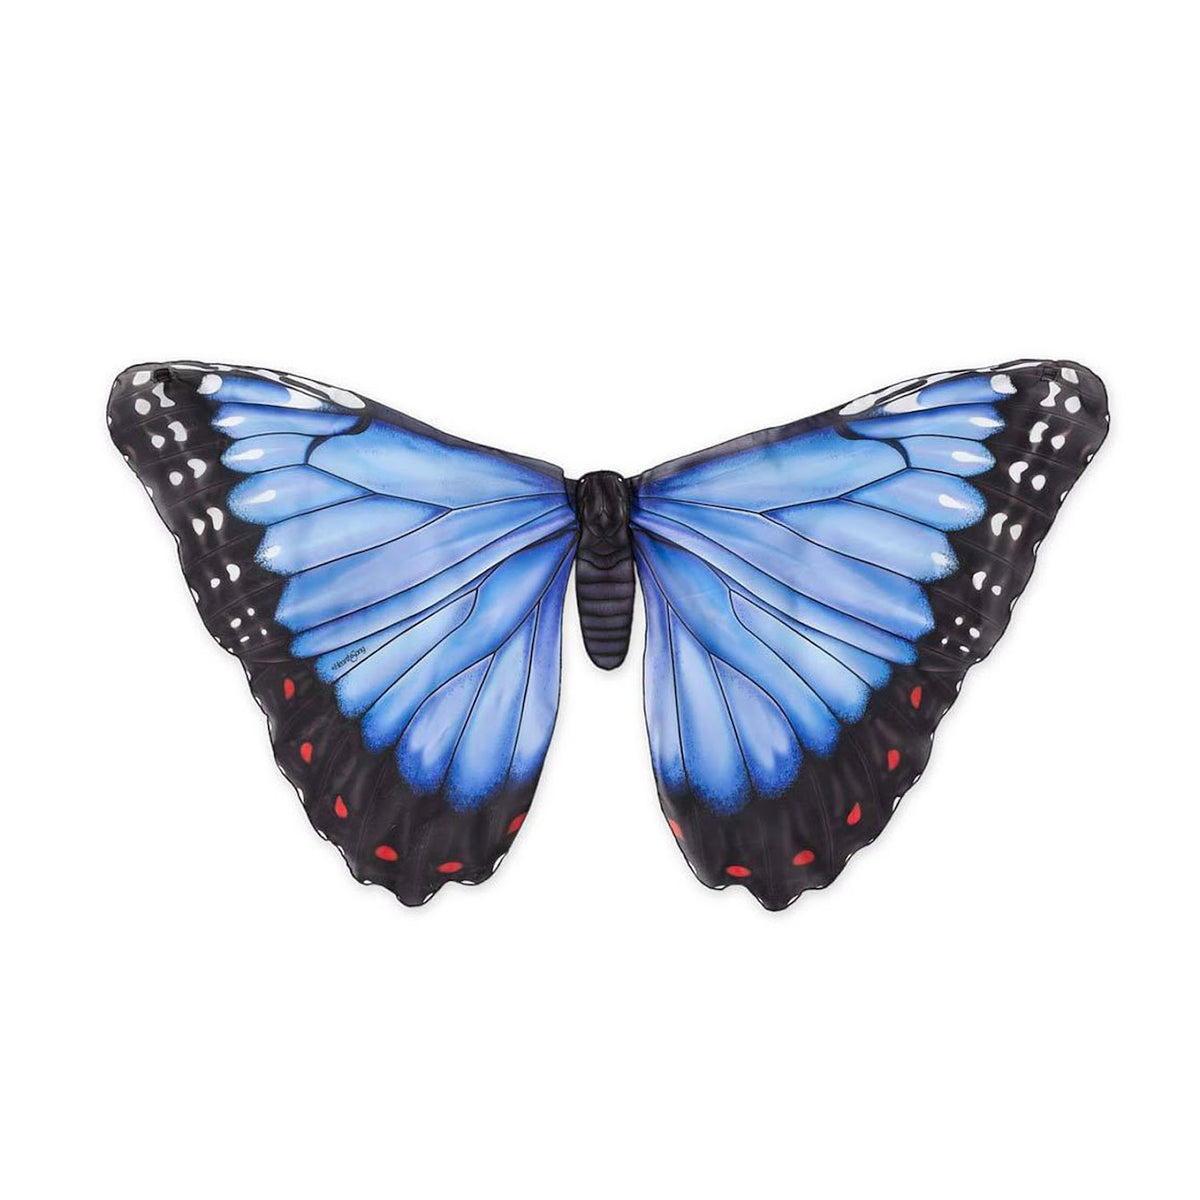 Realistic Butterfly Wings